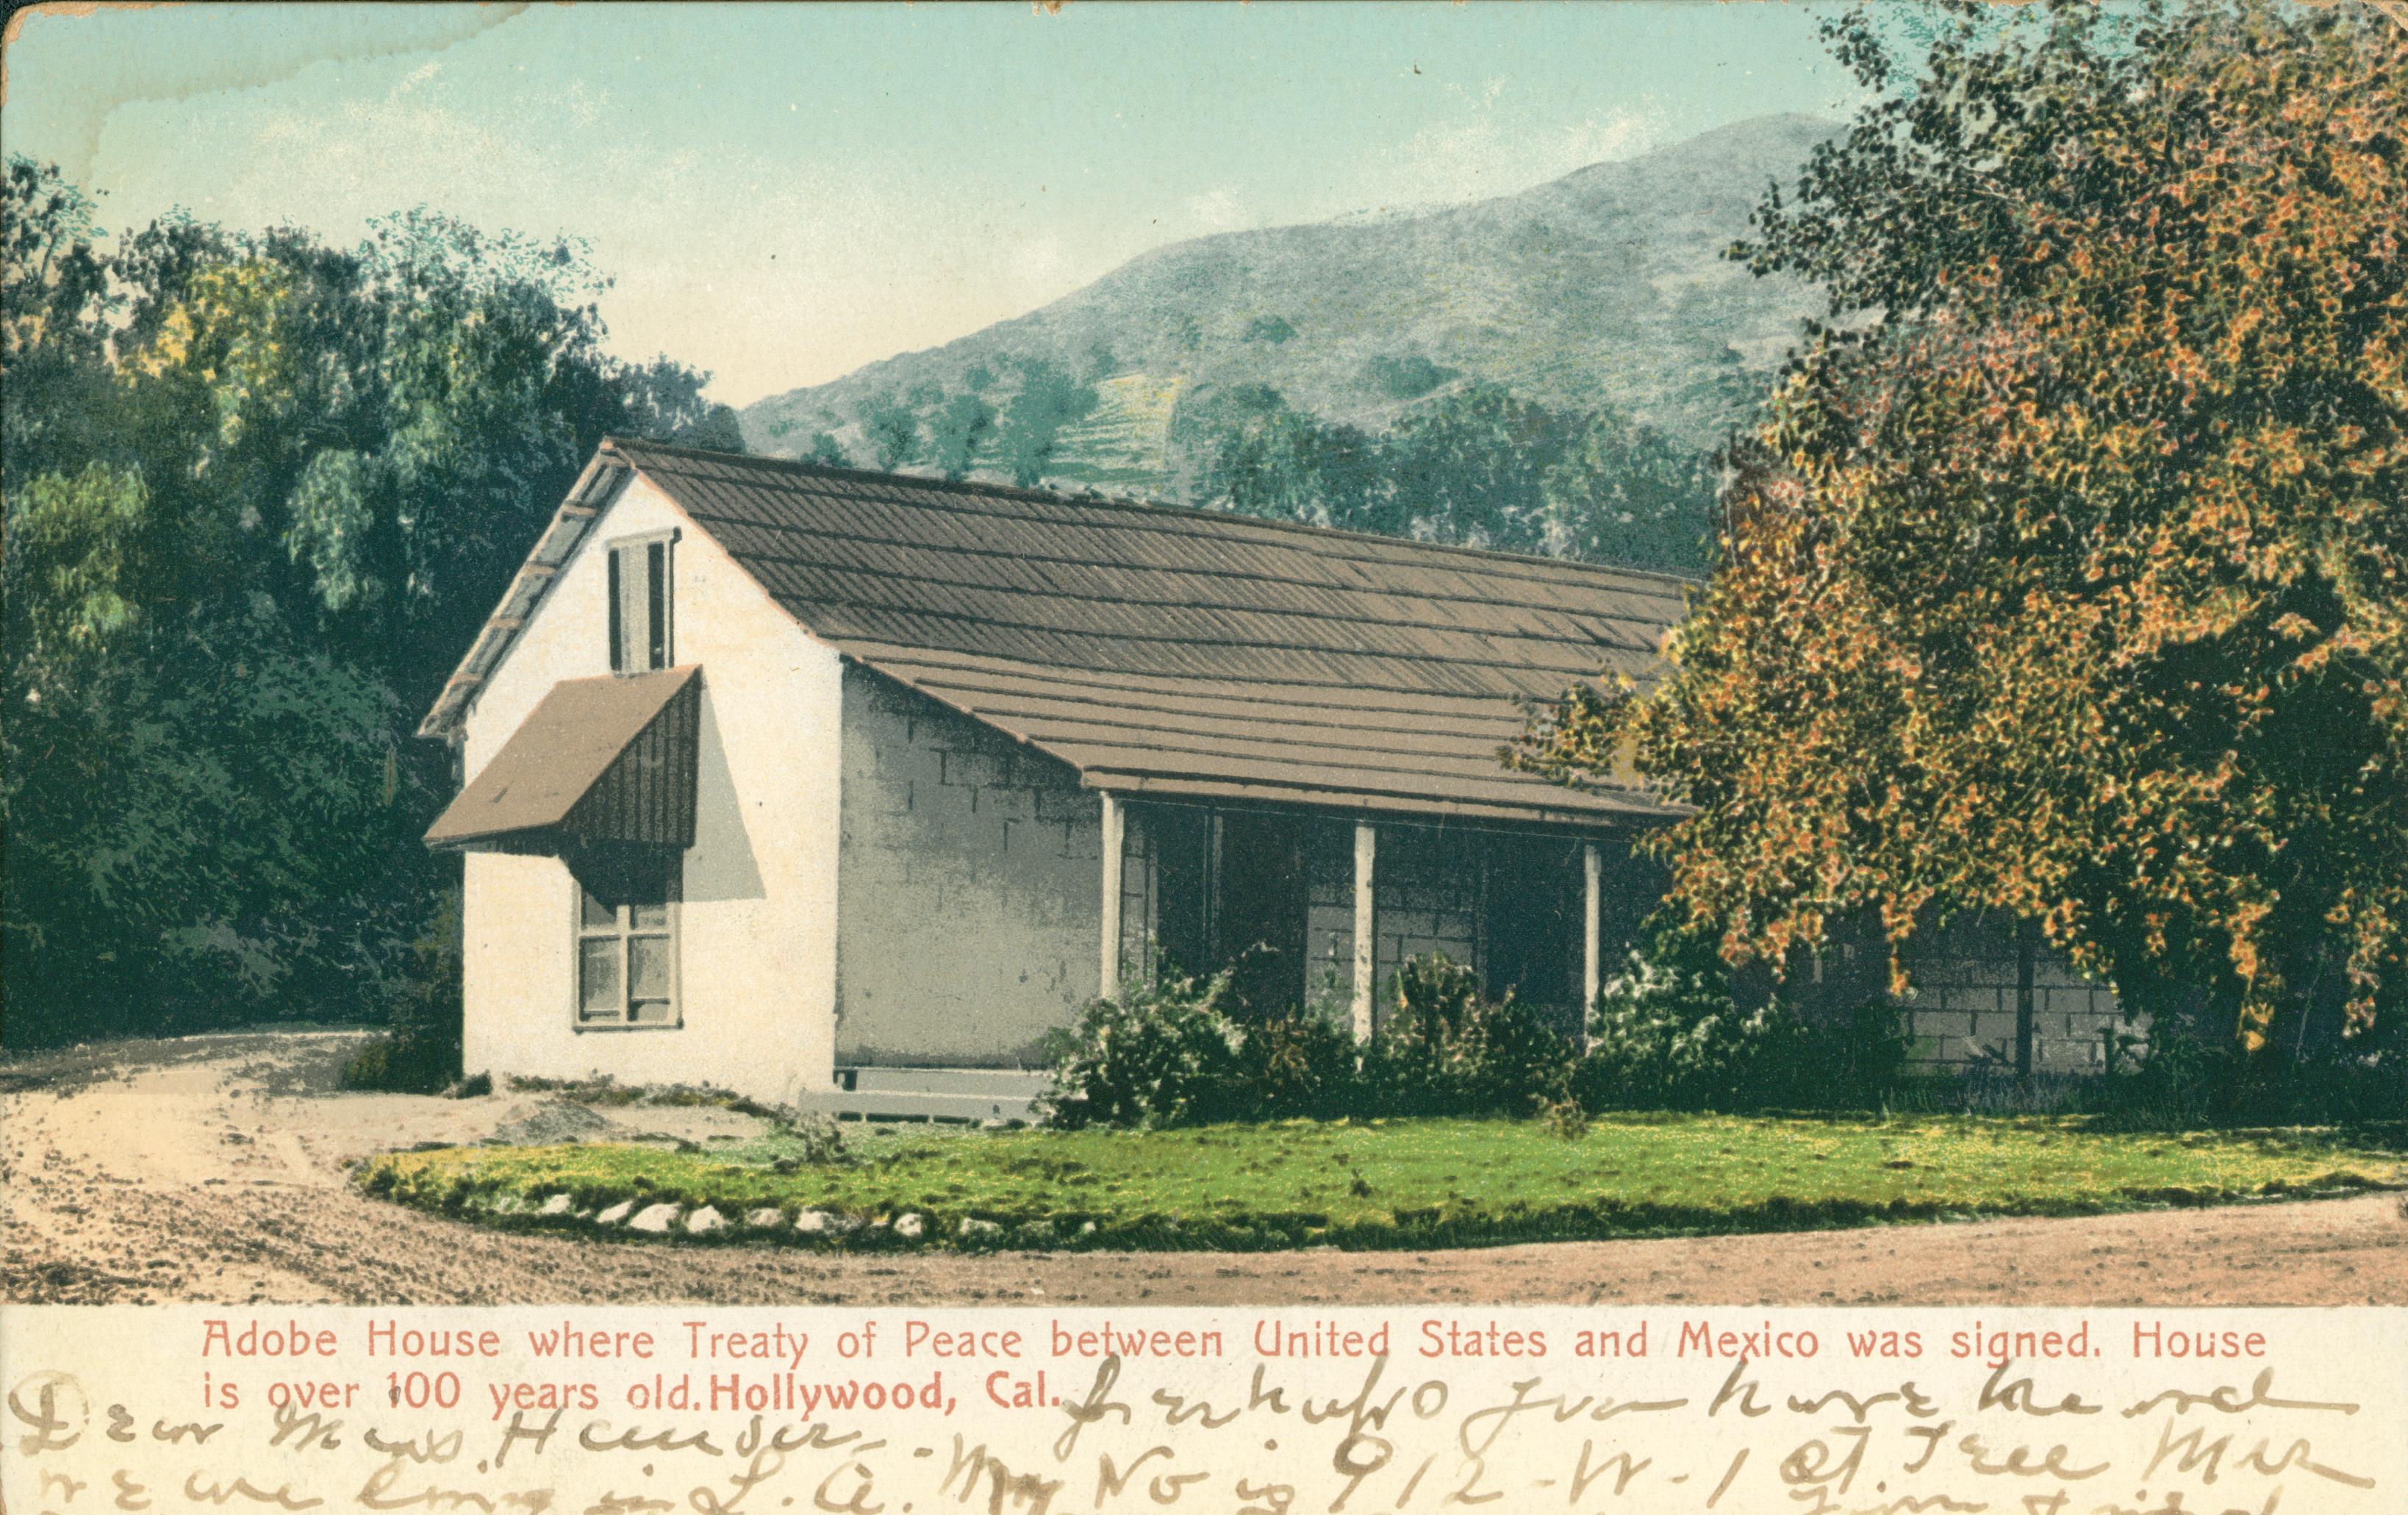 This postcard shows an Adobe house facing a dirt road.